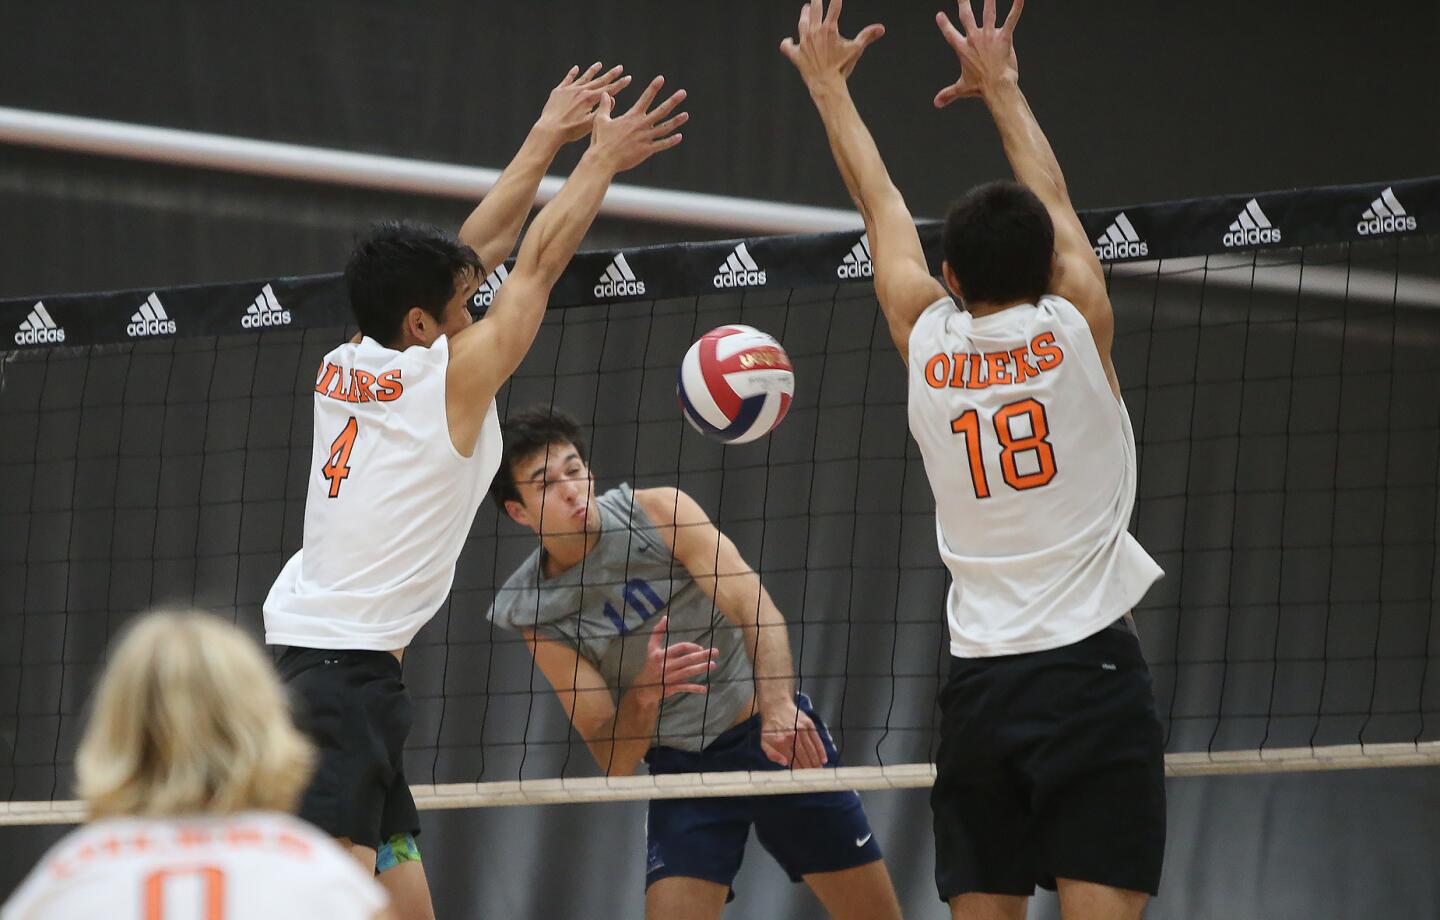 Photo Gallery: Corona del Mar vs. Huntington Beach in boys' volleyball